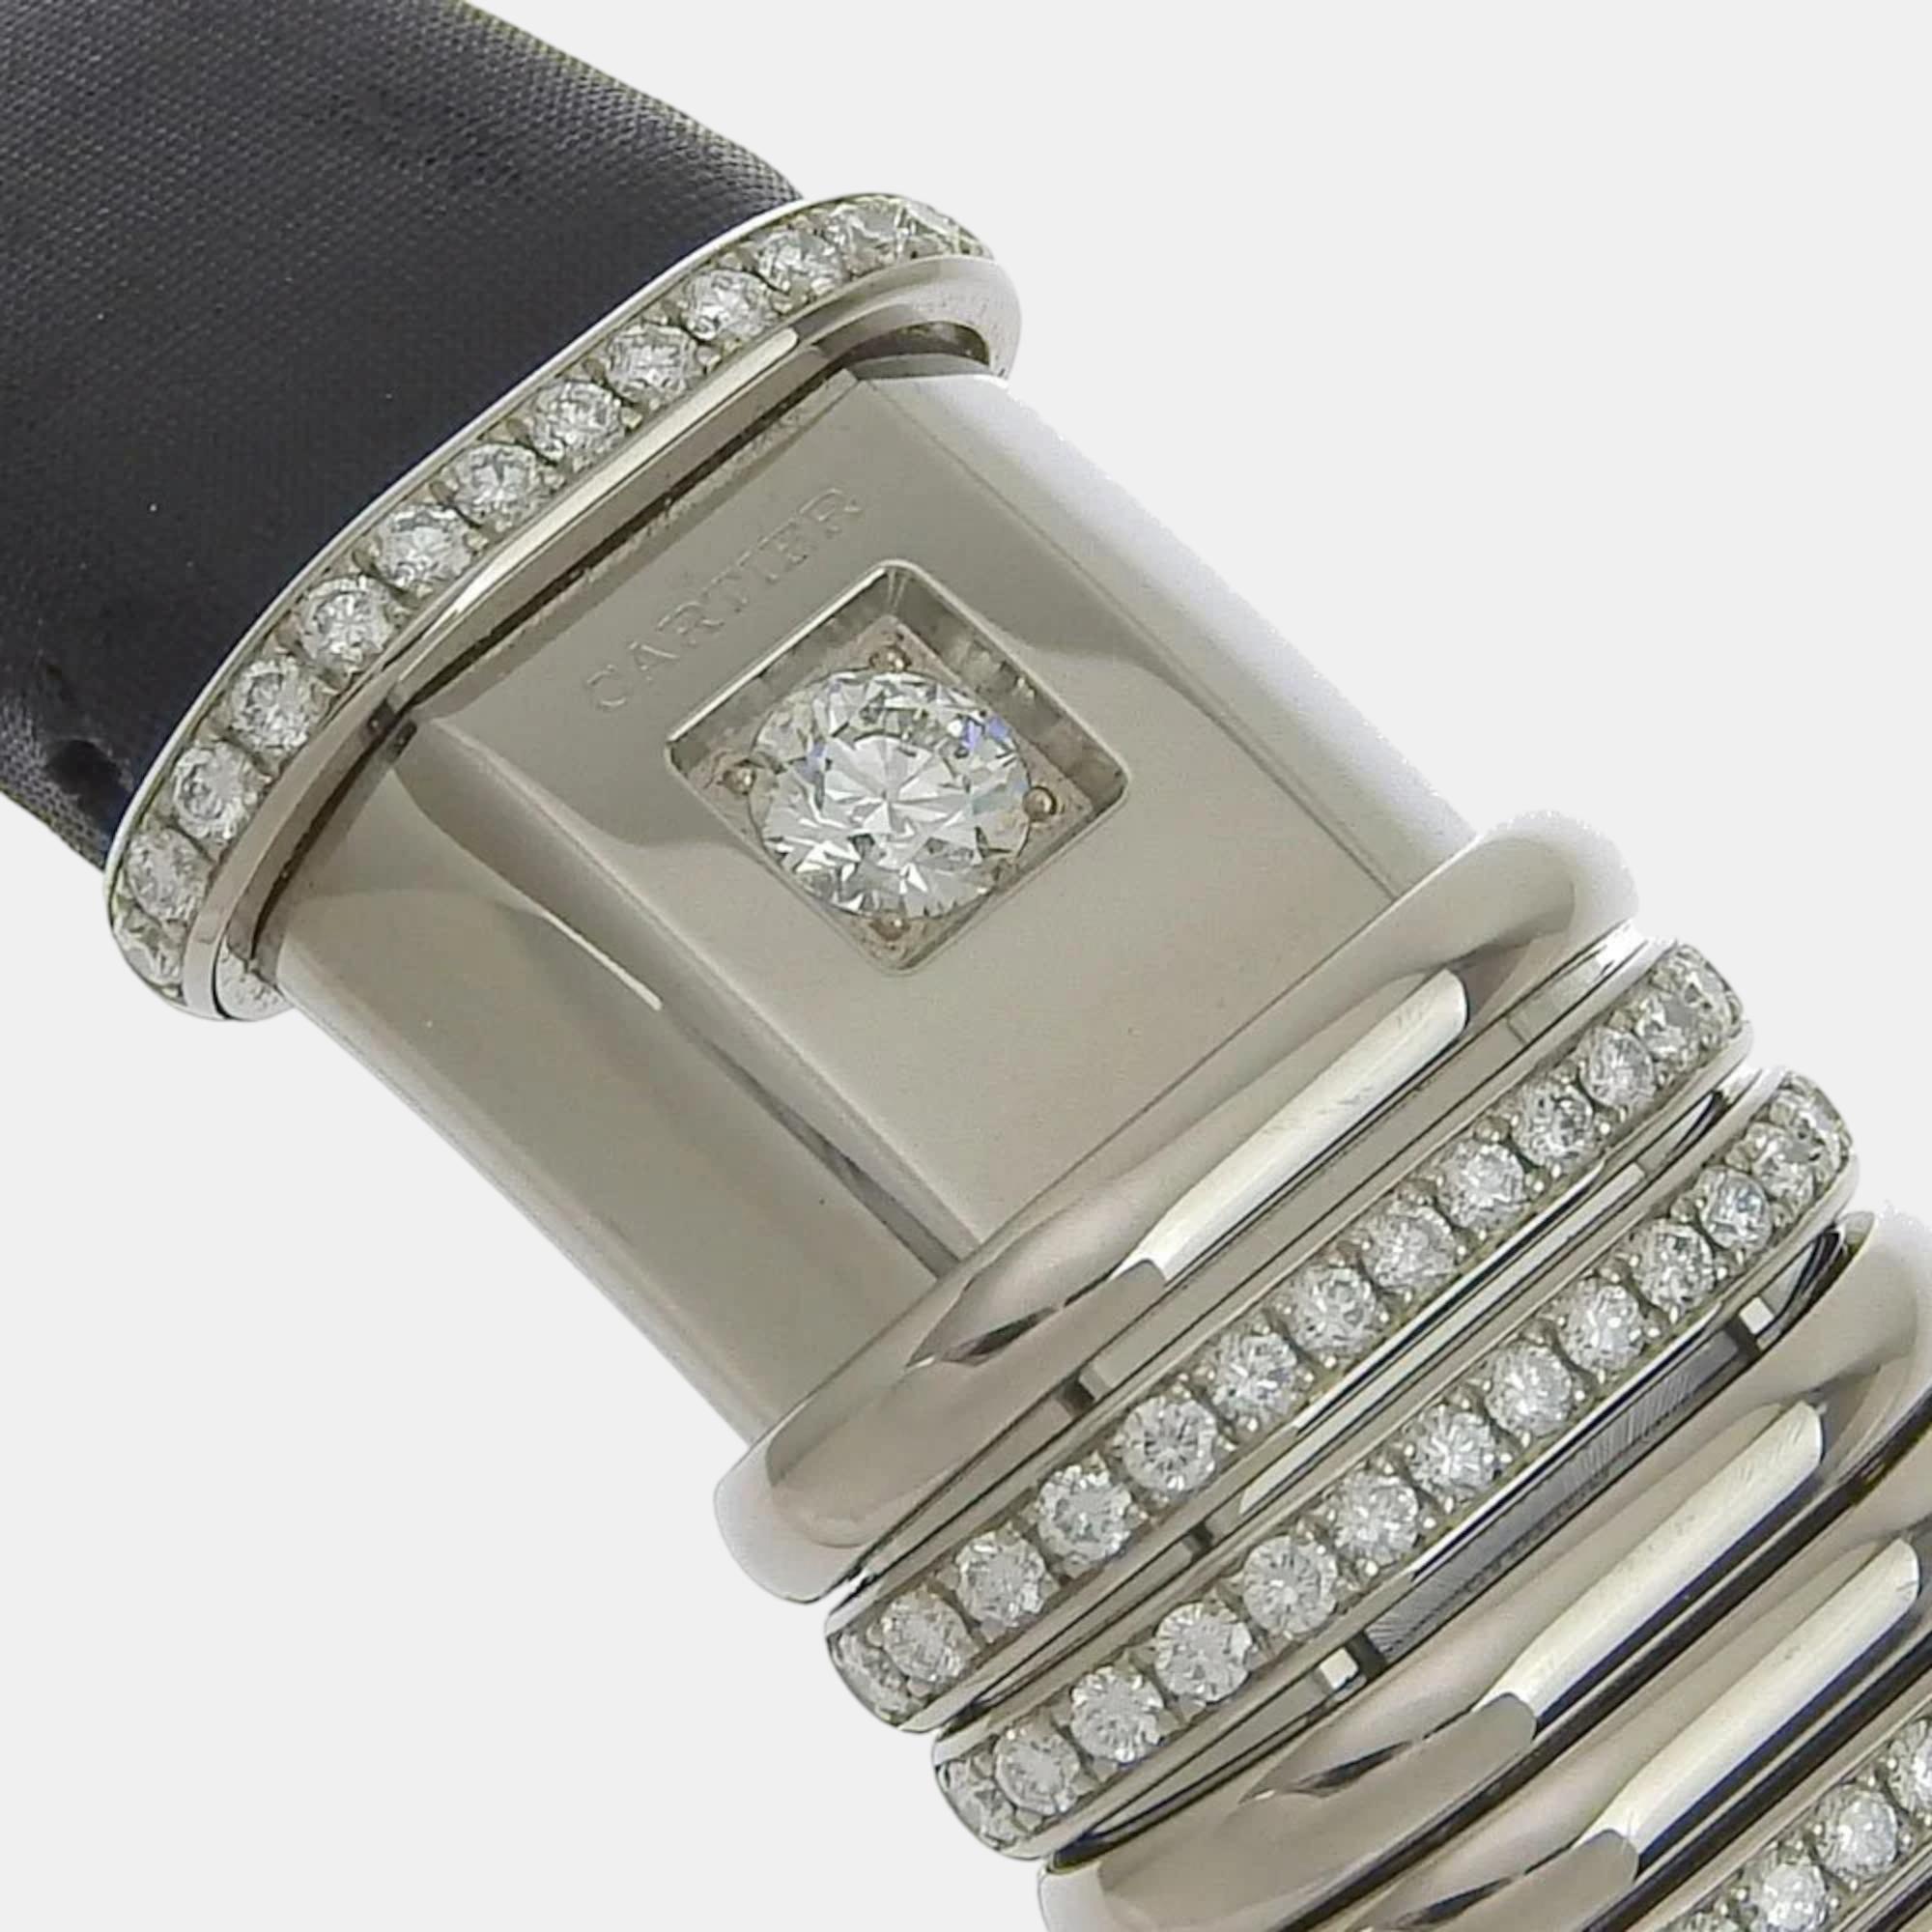 Cartier Silver Titanium Declaration WT000450 Quartz Women's Wristwatch 19 Mm